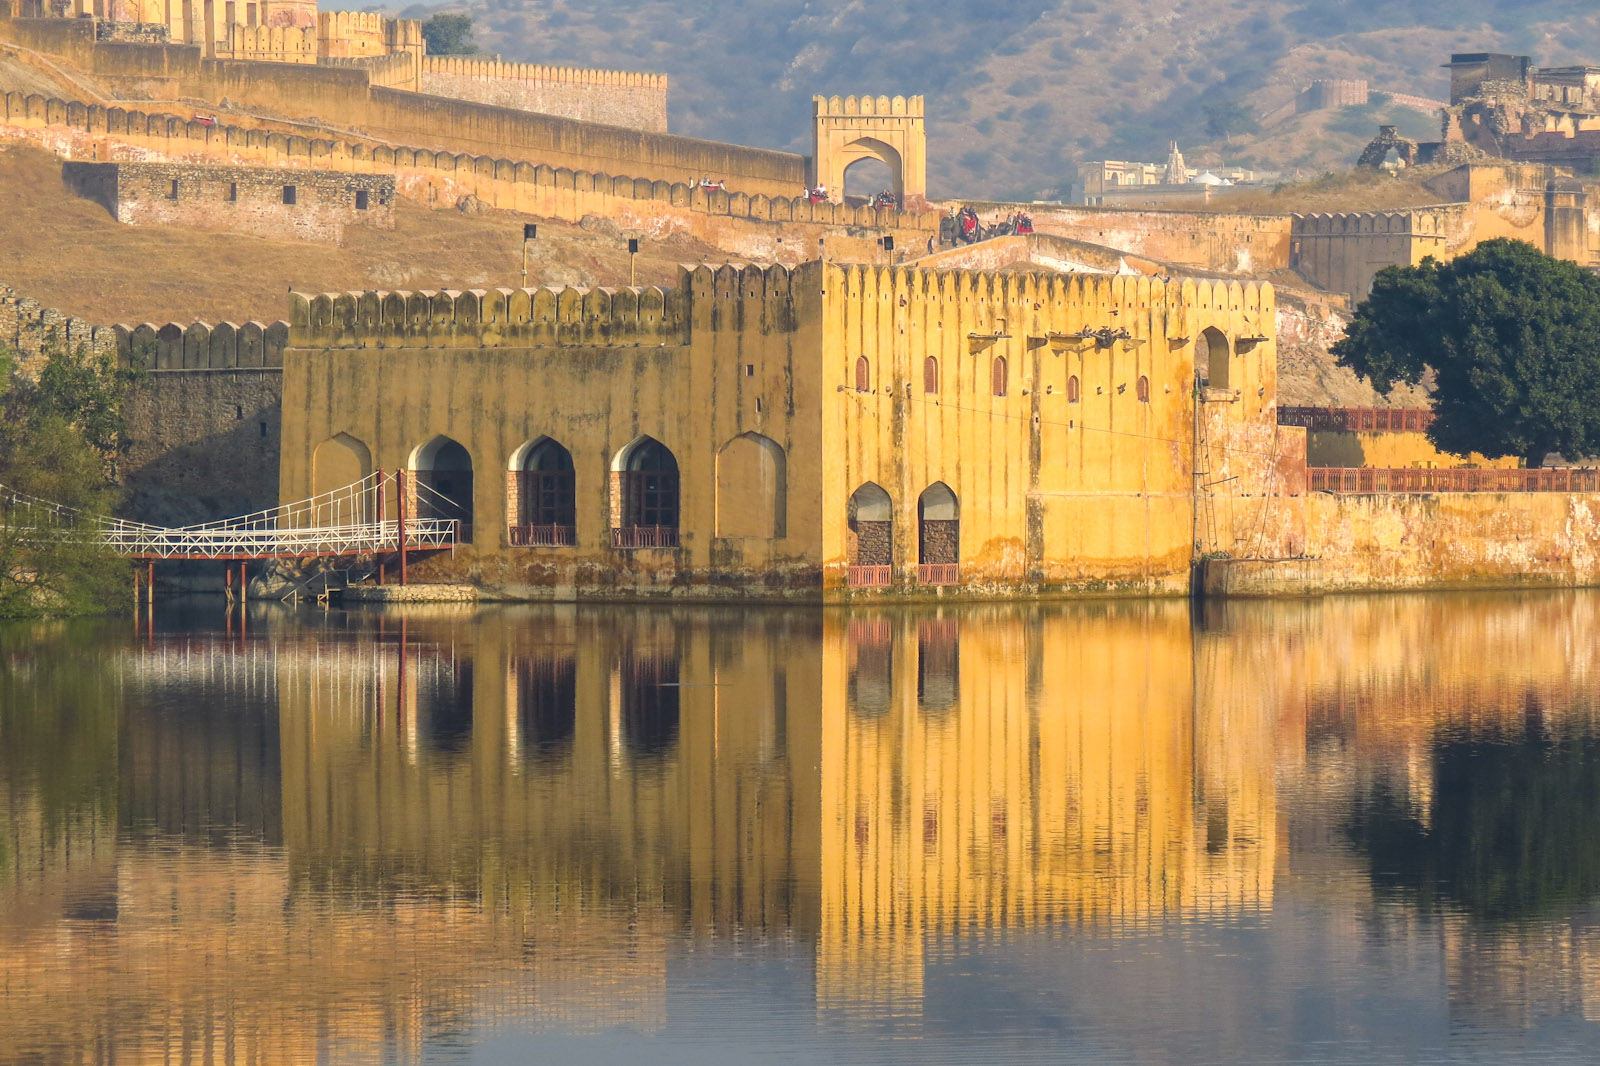 amber-palace-building-reflection-jaipur